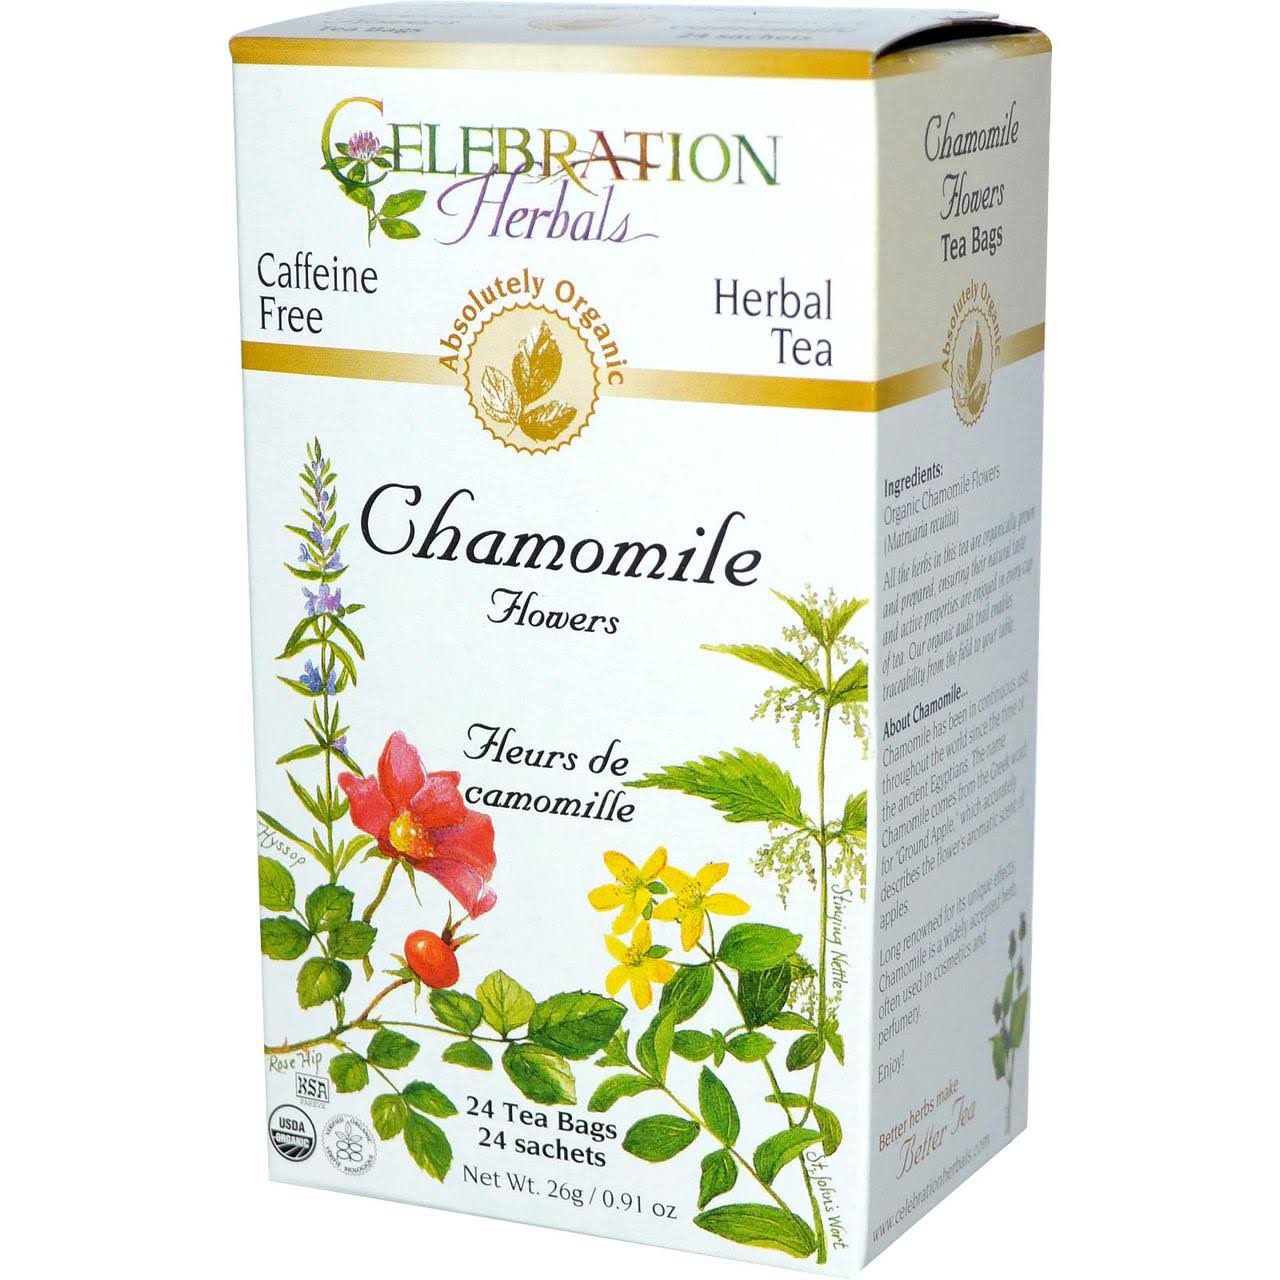 Celebration Herbals Herbal Tea - Chamomile, 24 Tea Bags